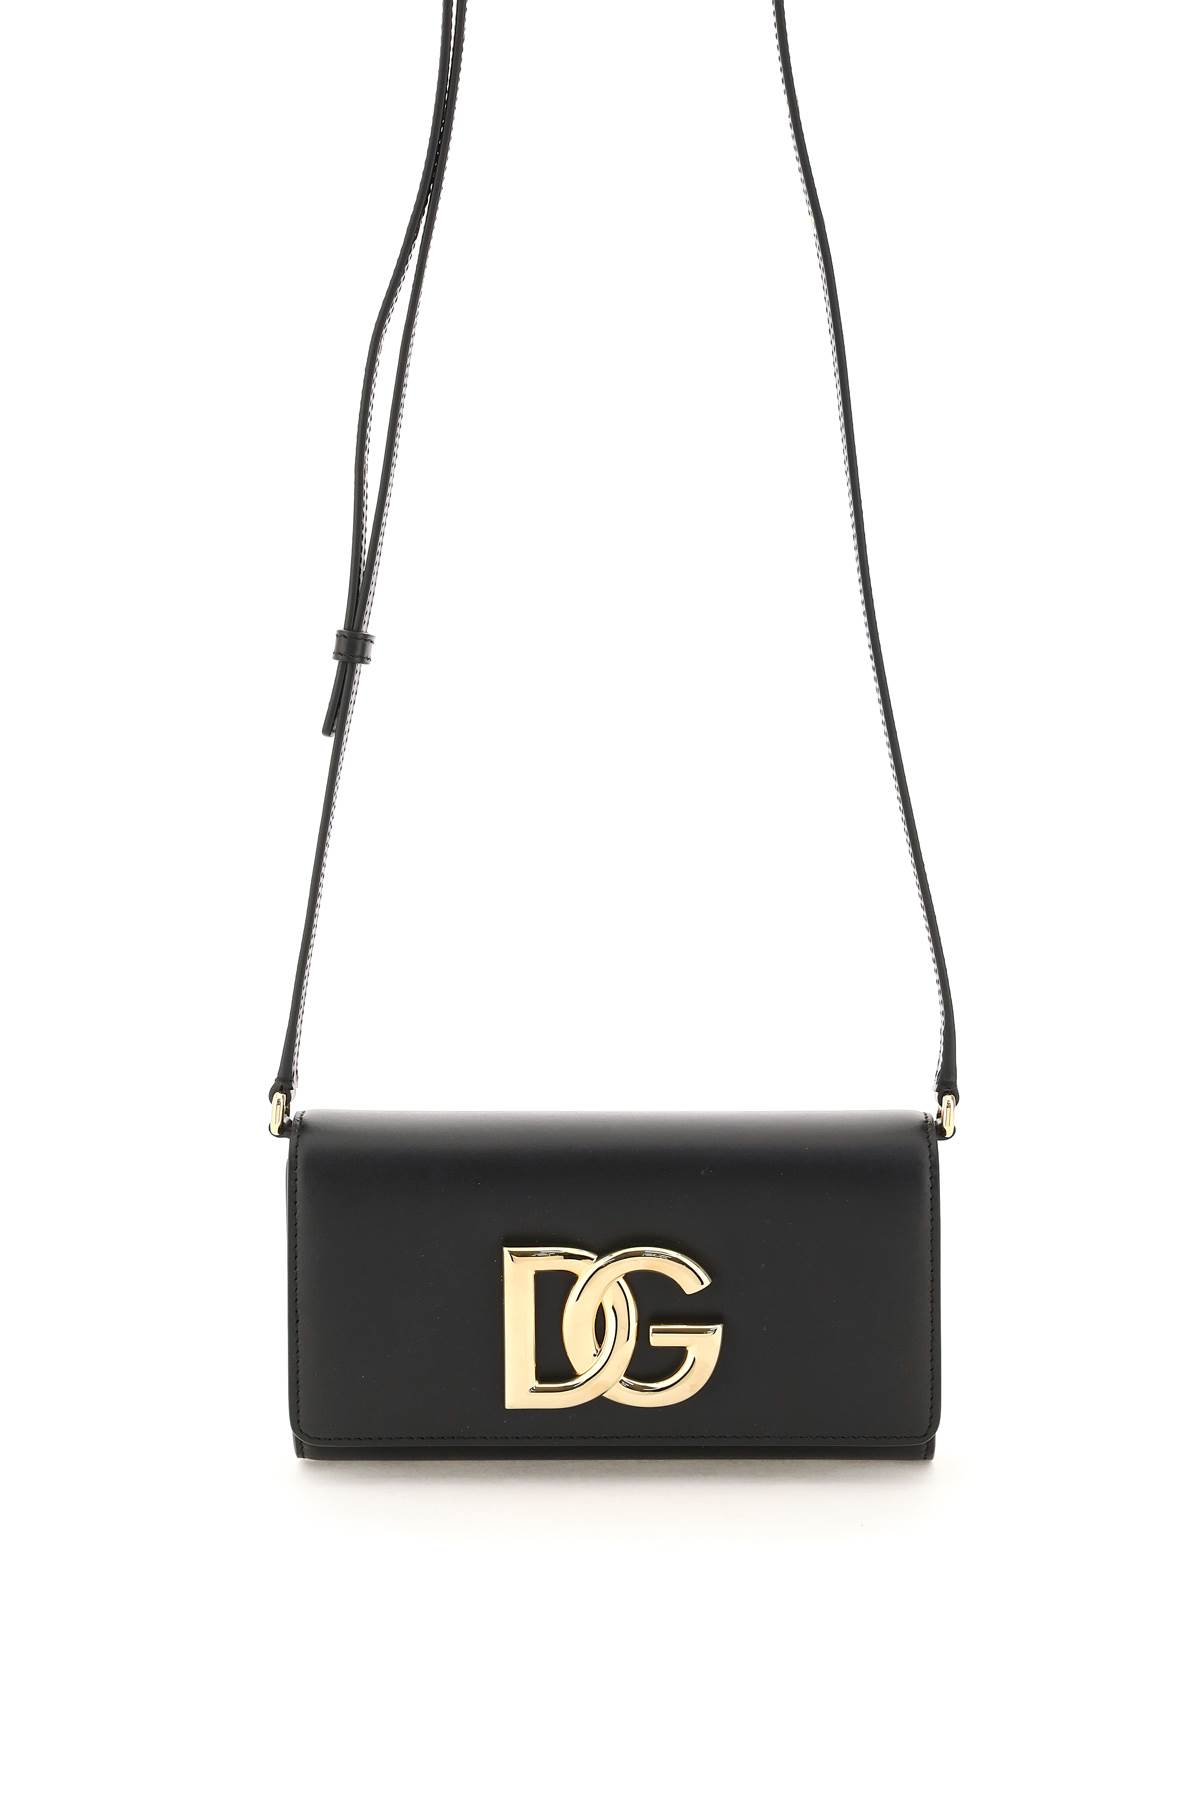 Dolce & Gabbana Leather Clutch With Logo